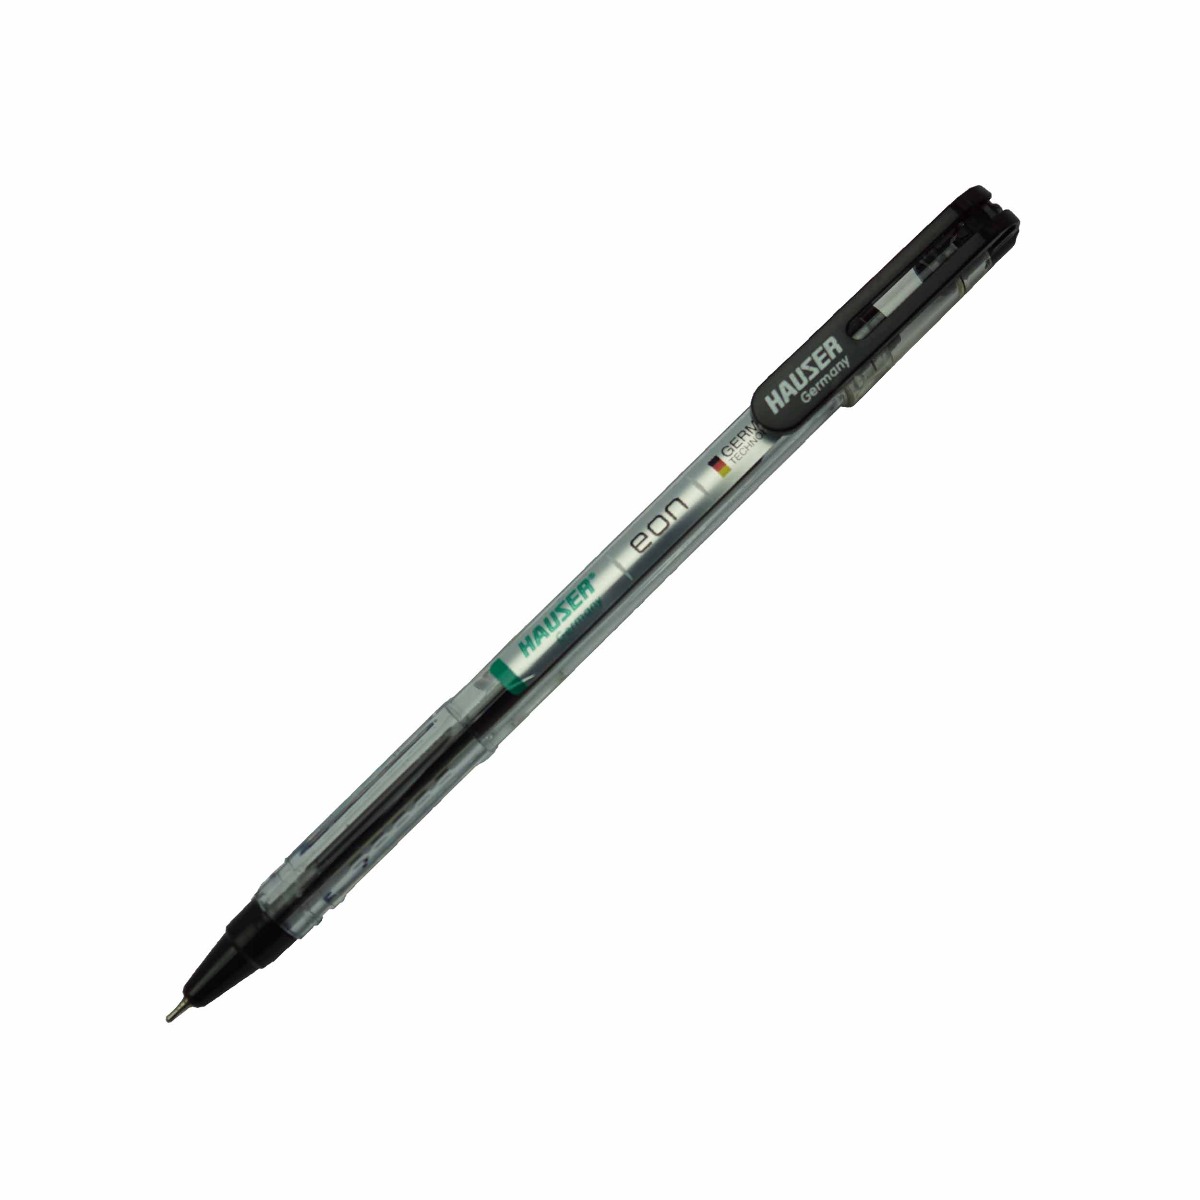 Hauser Model: 15286 eon Transparent body with black clip black ink fine tip cap type ball pen